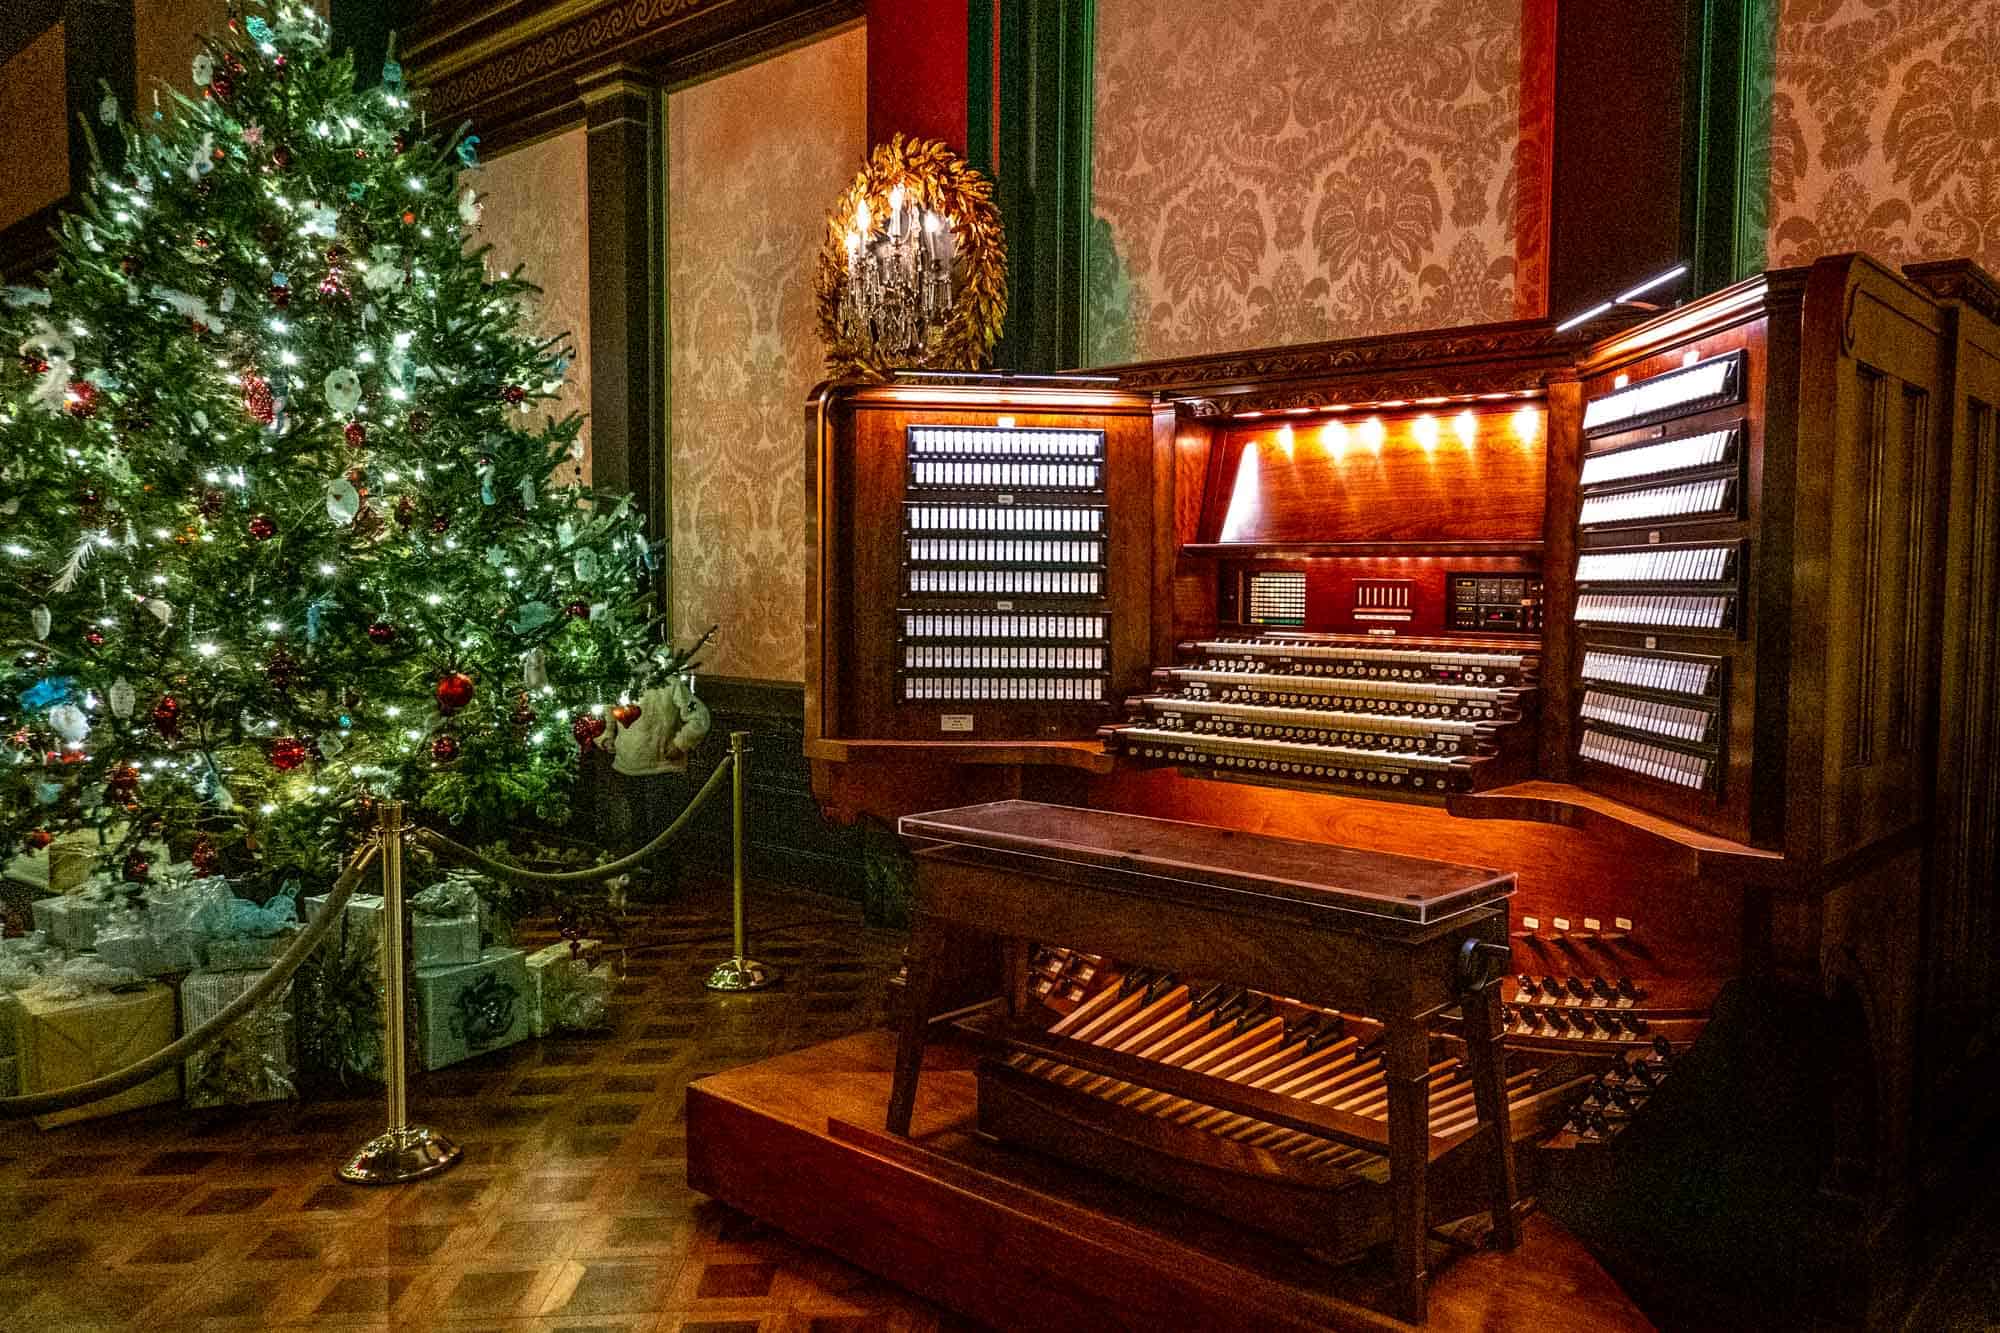 Christmas tree beside an organ